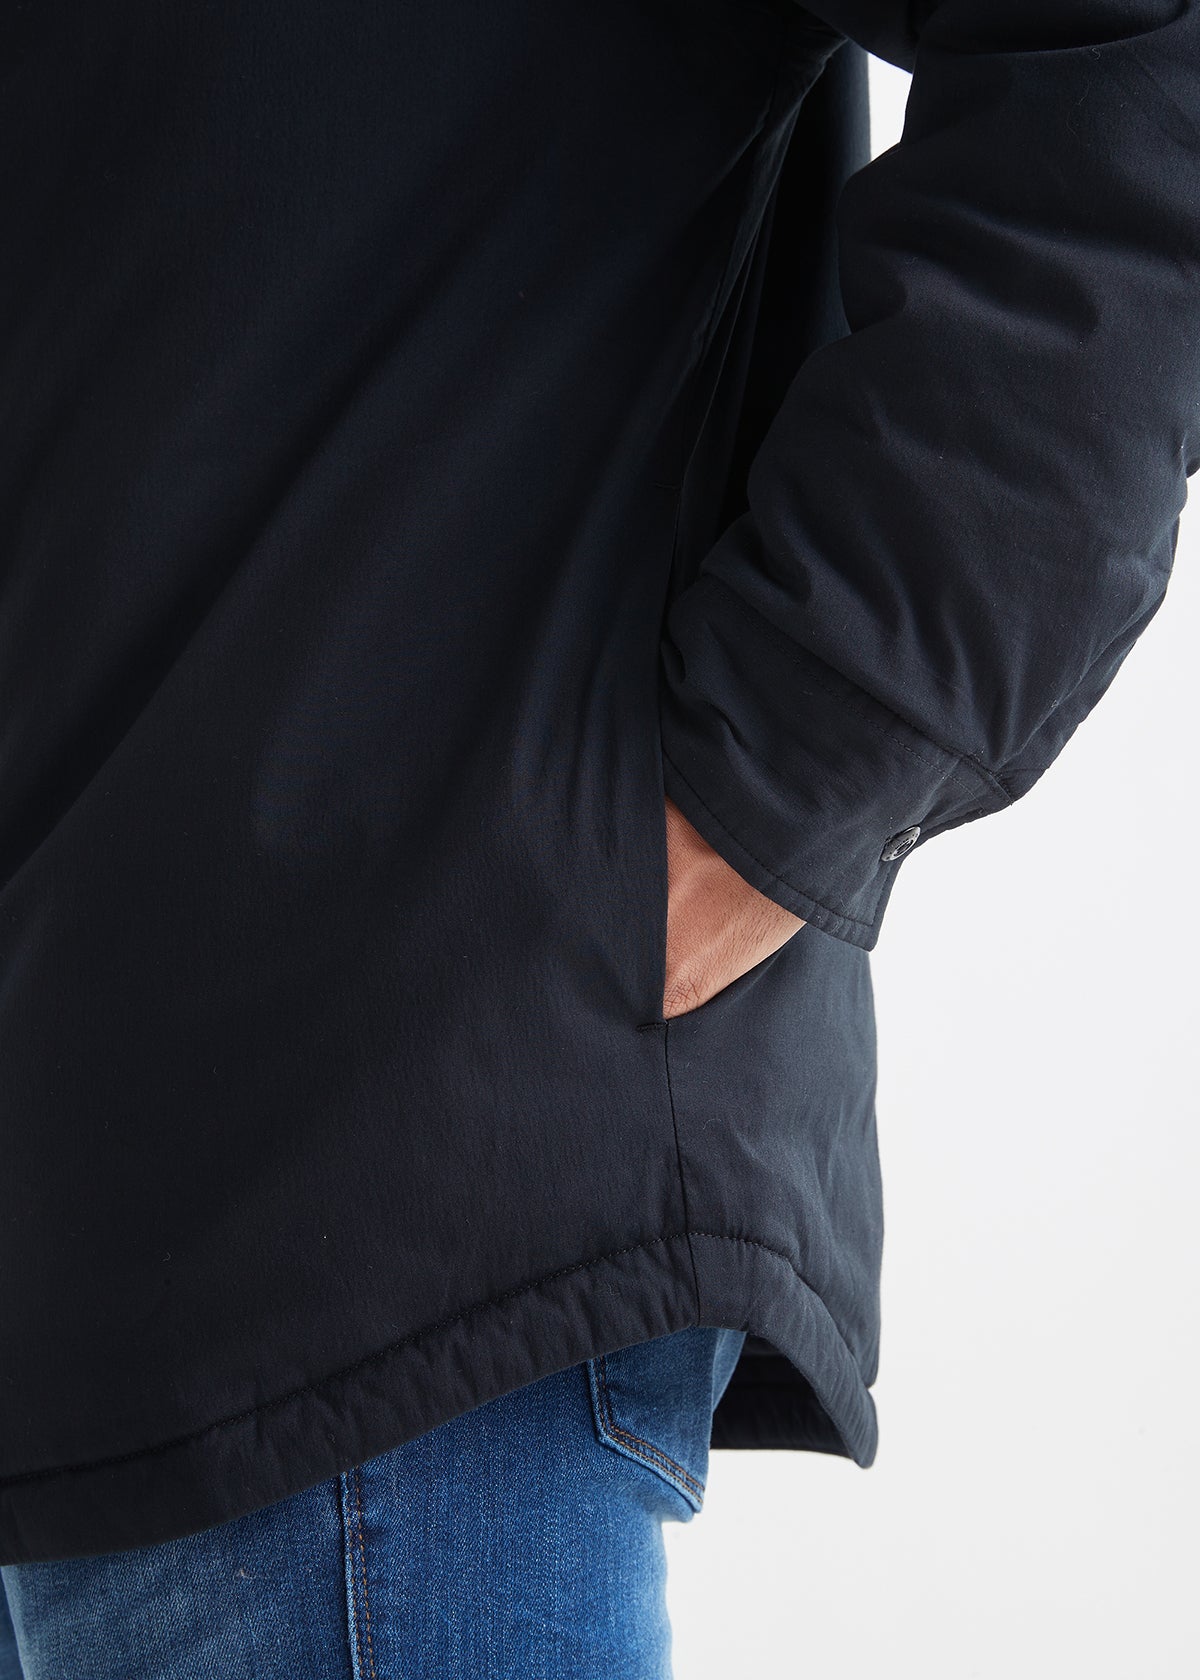 mens lightweight insulated black shirt jacket side pocket